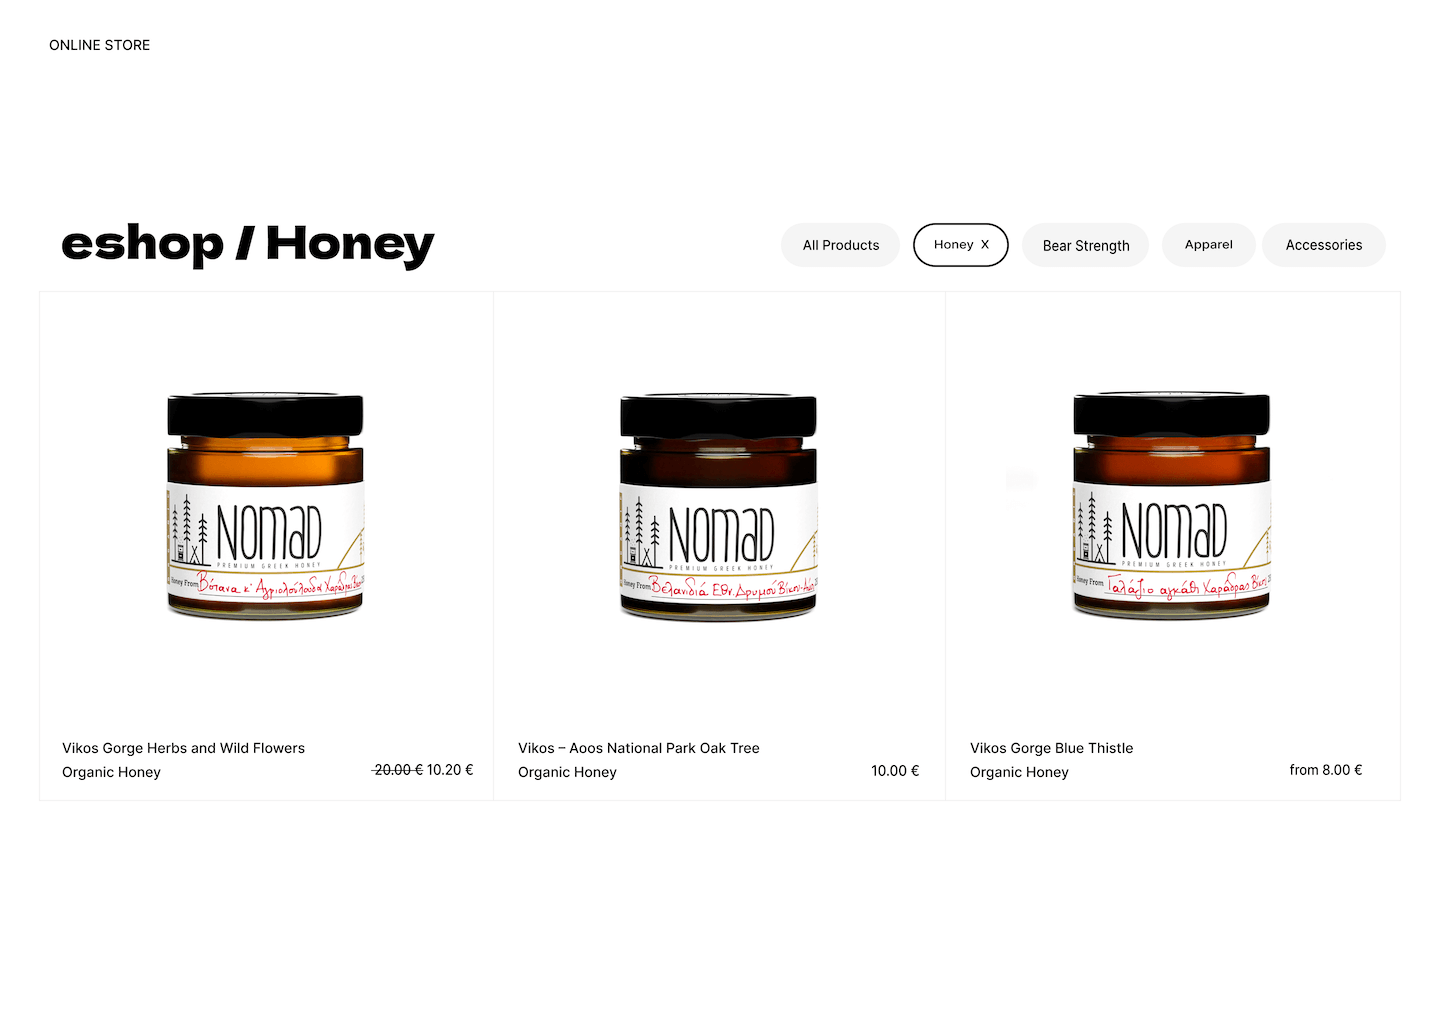 eshop honey products